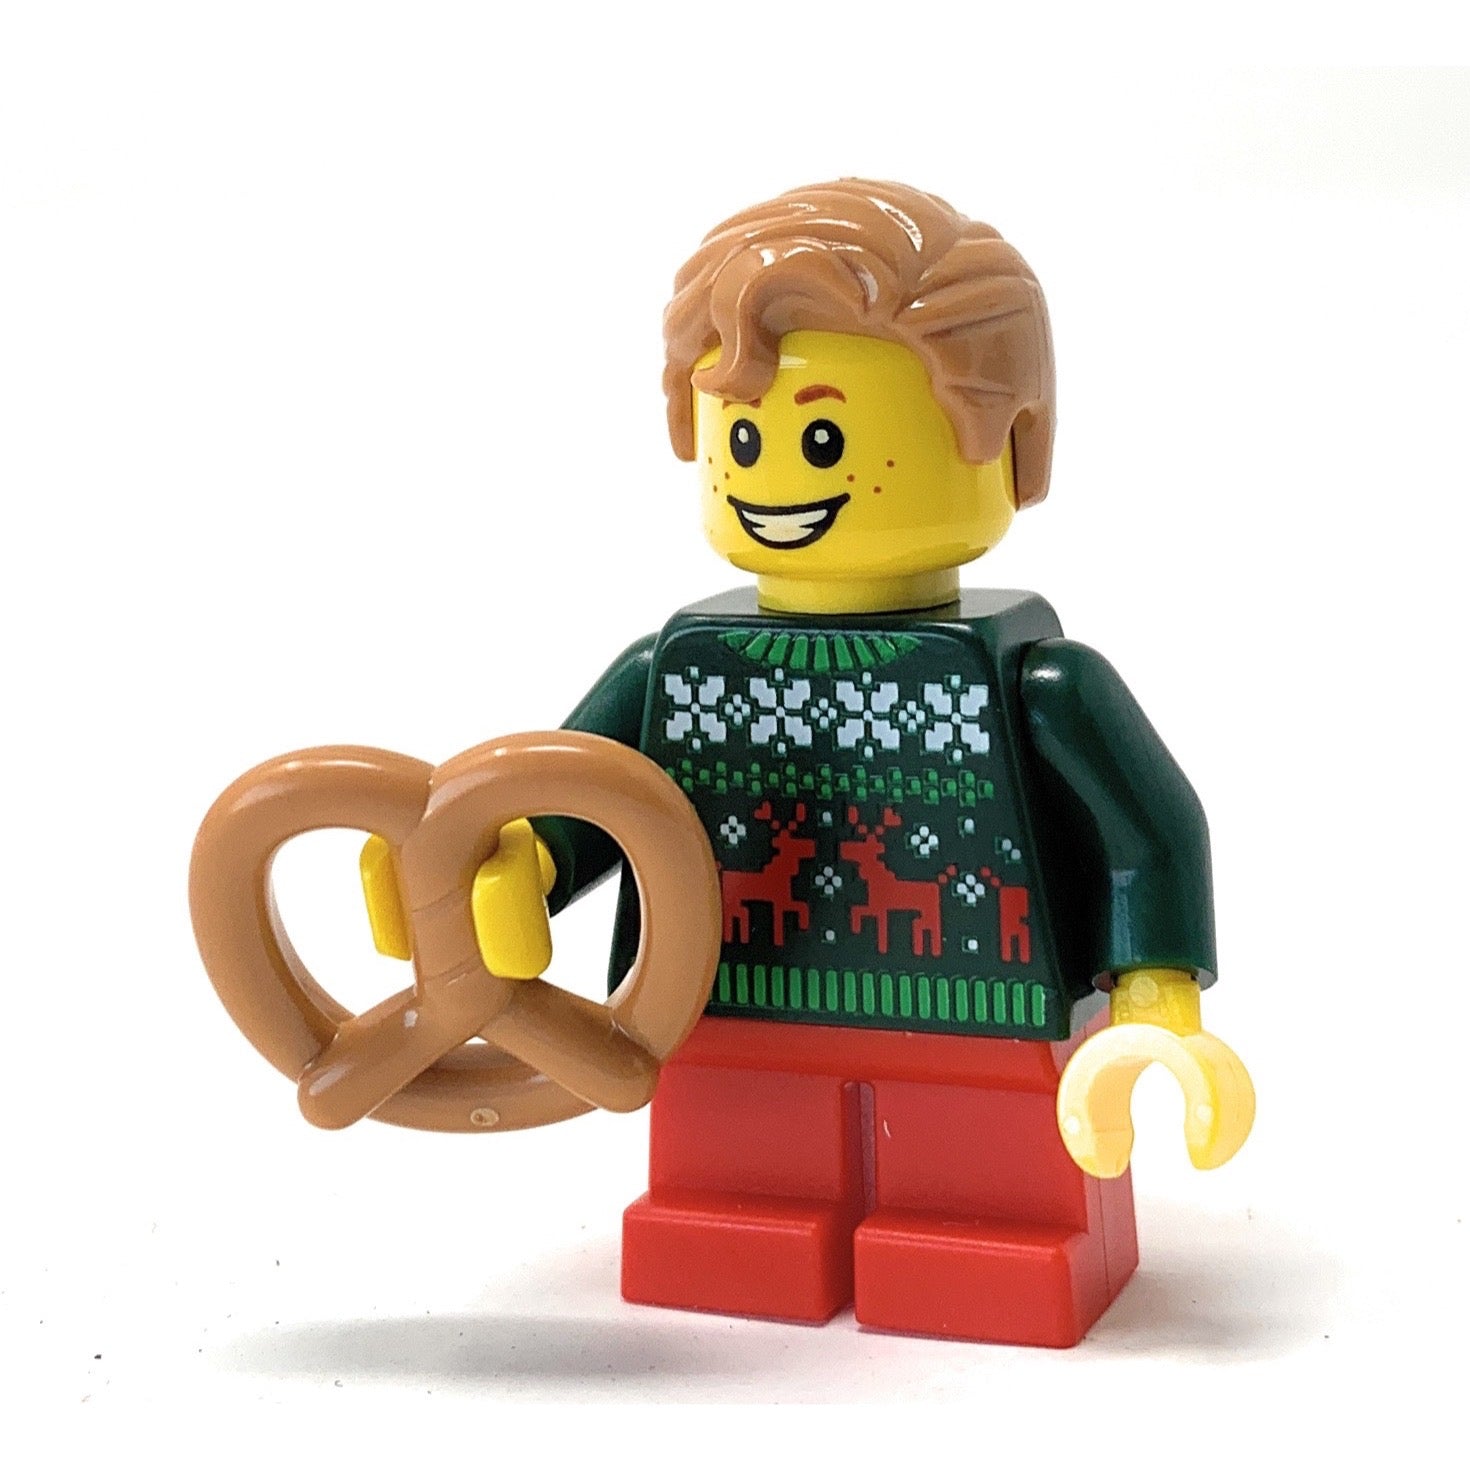 Christmas Sweater Boy w/ Pretzel - LEGO Christmas Seasonal The Brick Show Shop